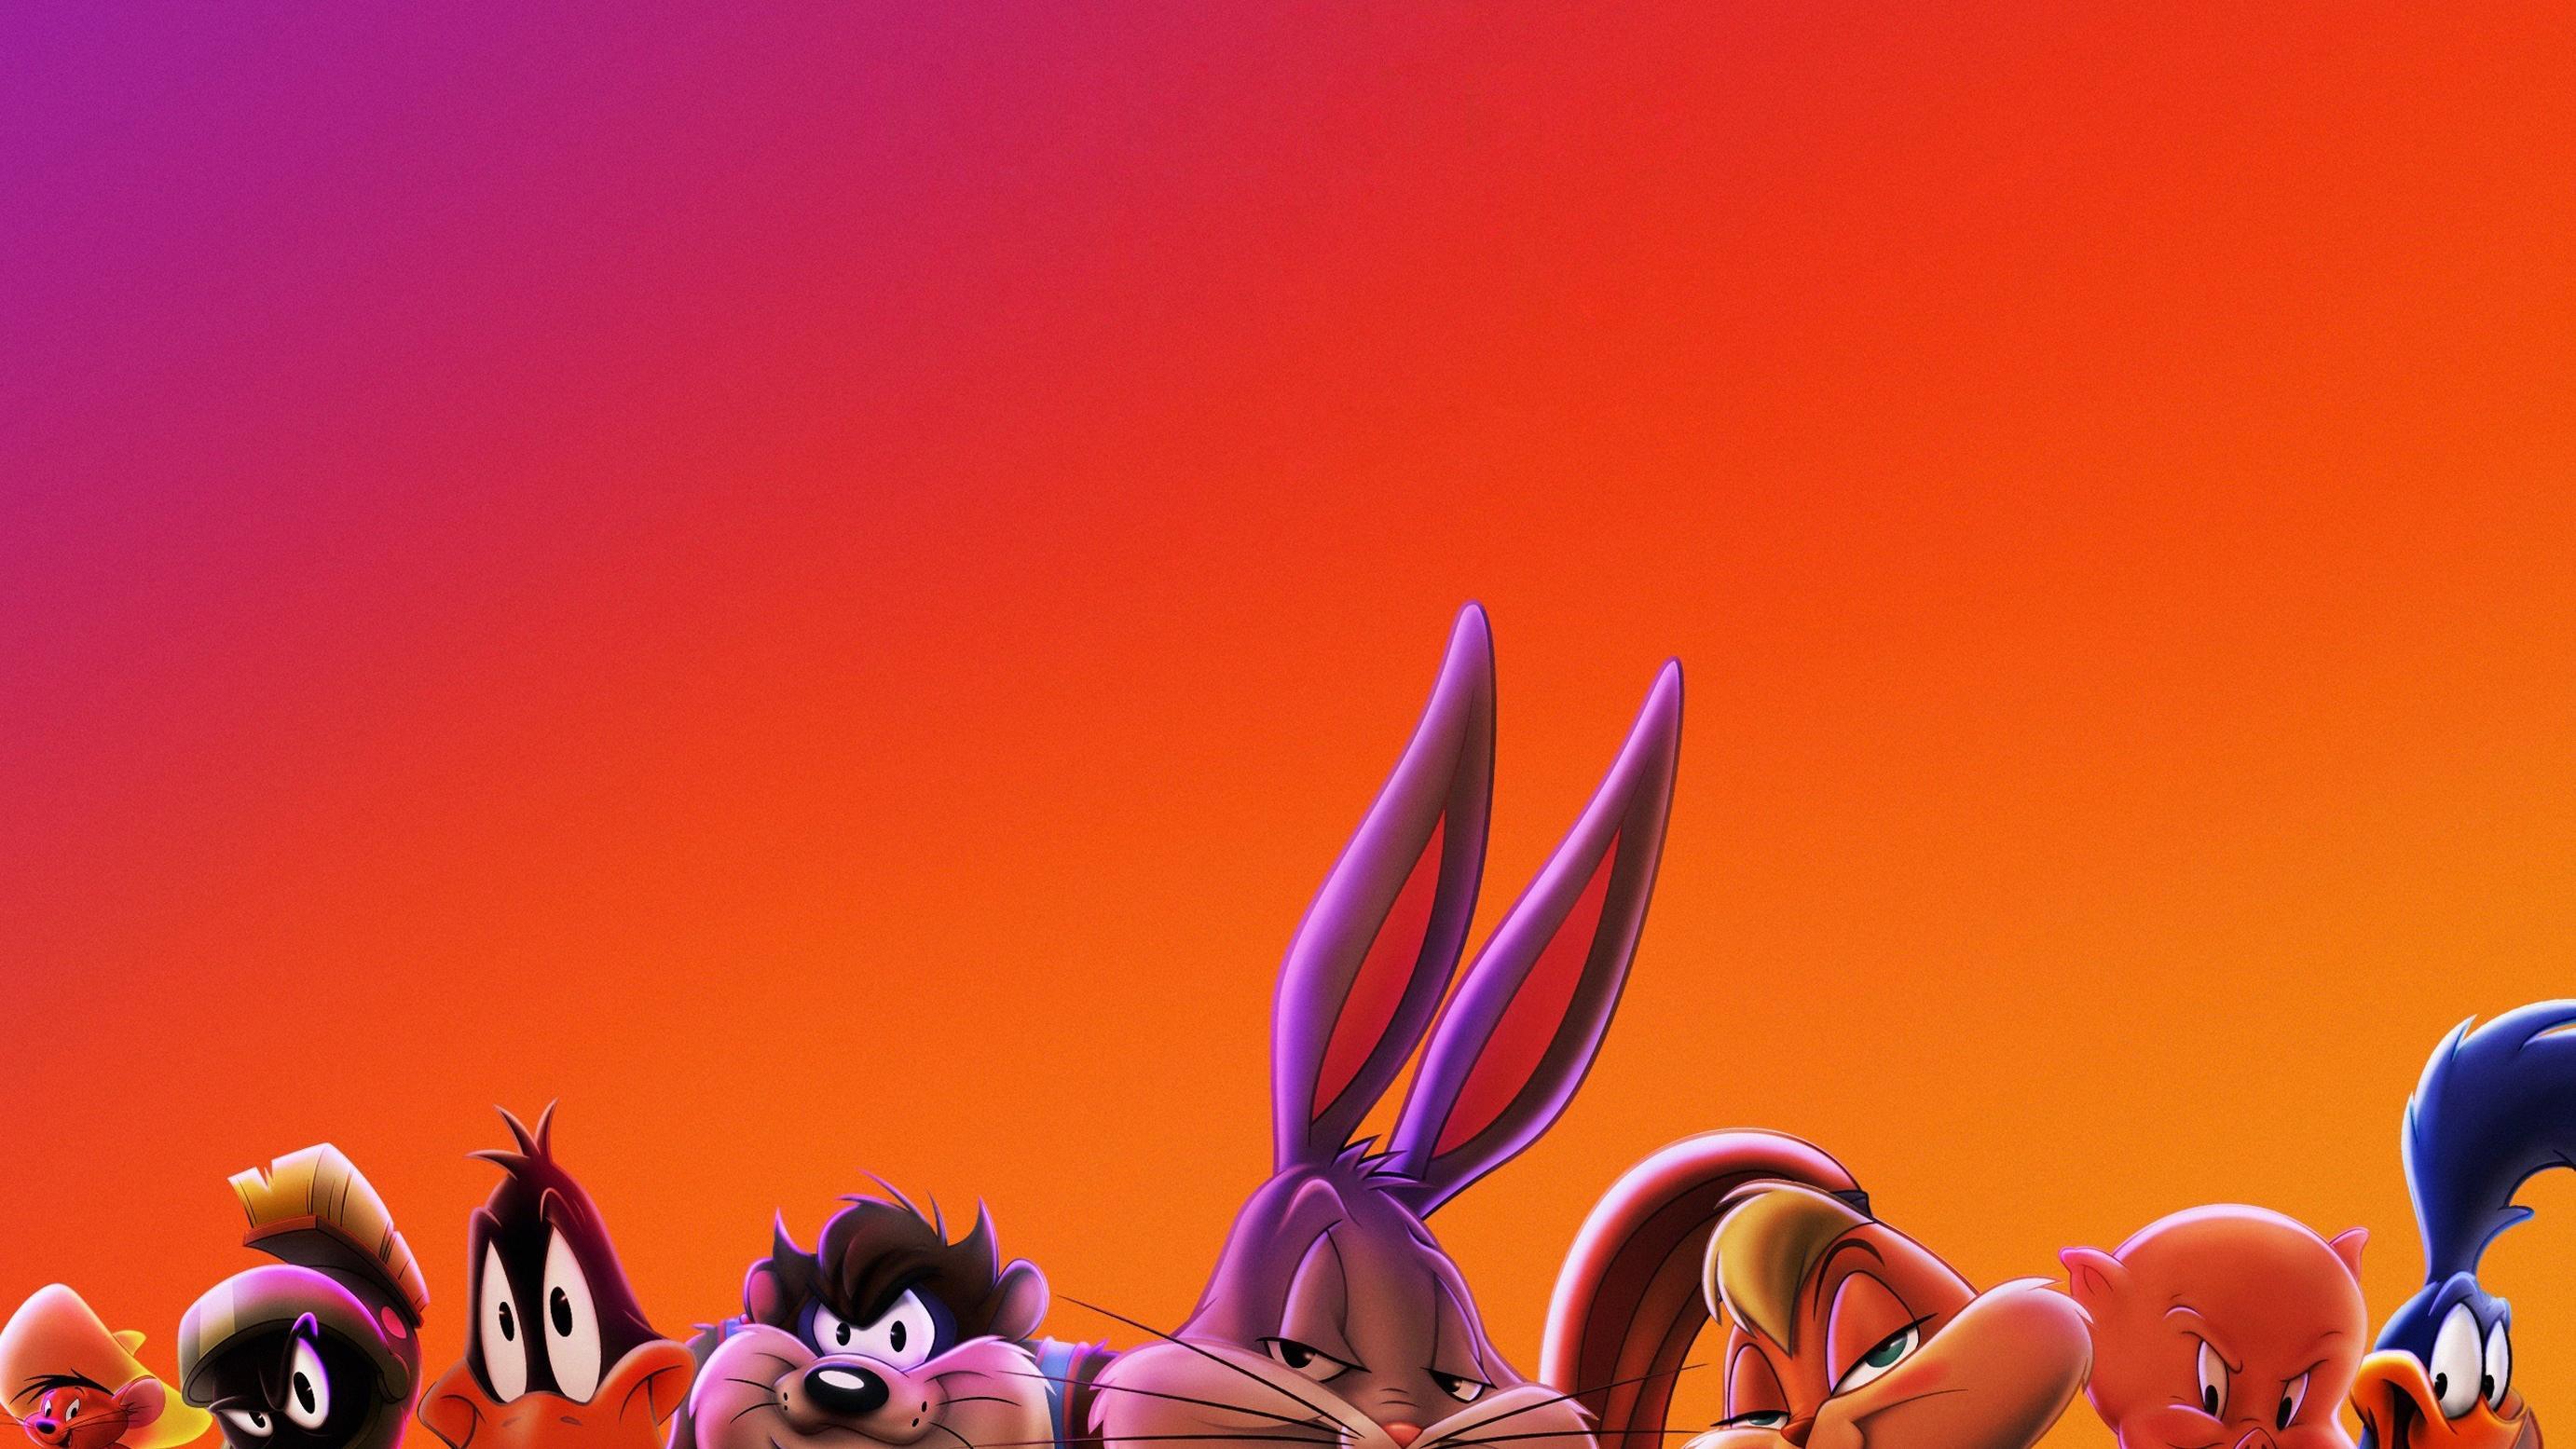 HD wallpaper, Lola Bunny Hd, Marvin The Martian, Tweety, Tasmanian Devil Looney Tunes, Bugs Bunny, Daffy Duck, Porky Pig, Lola Bunny